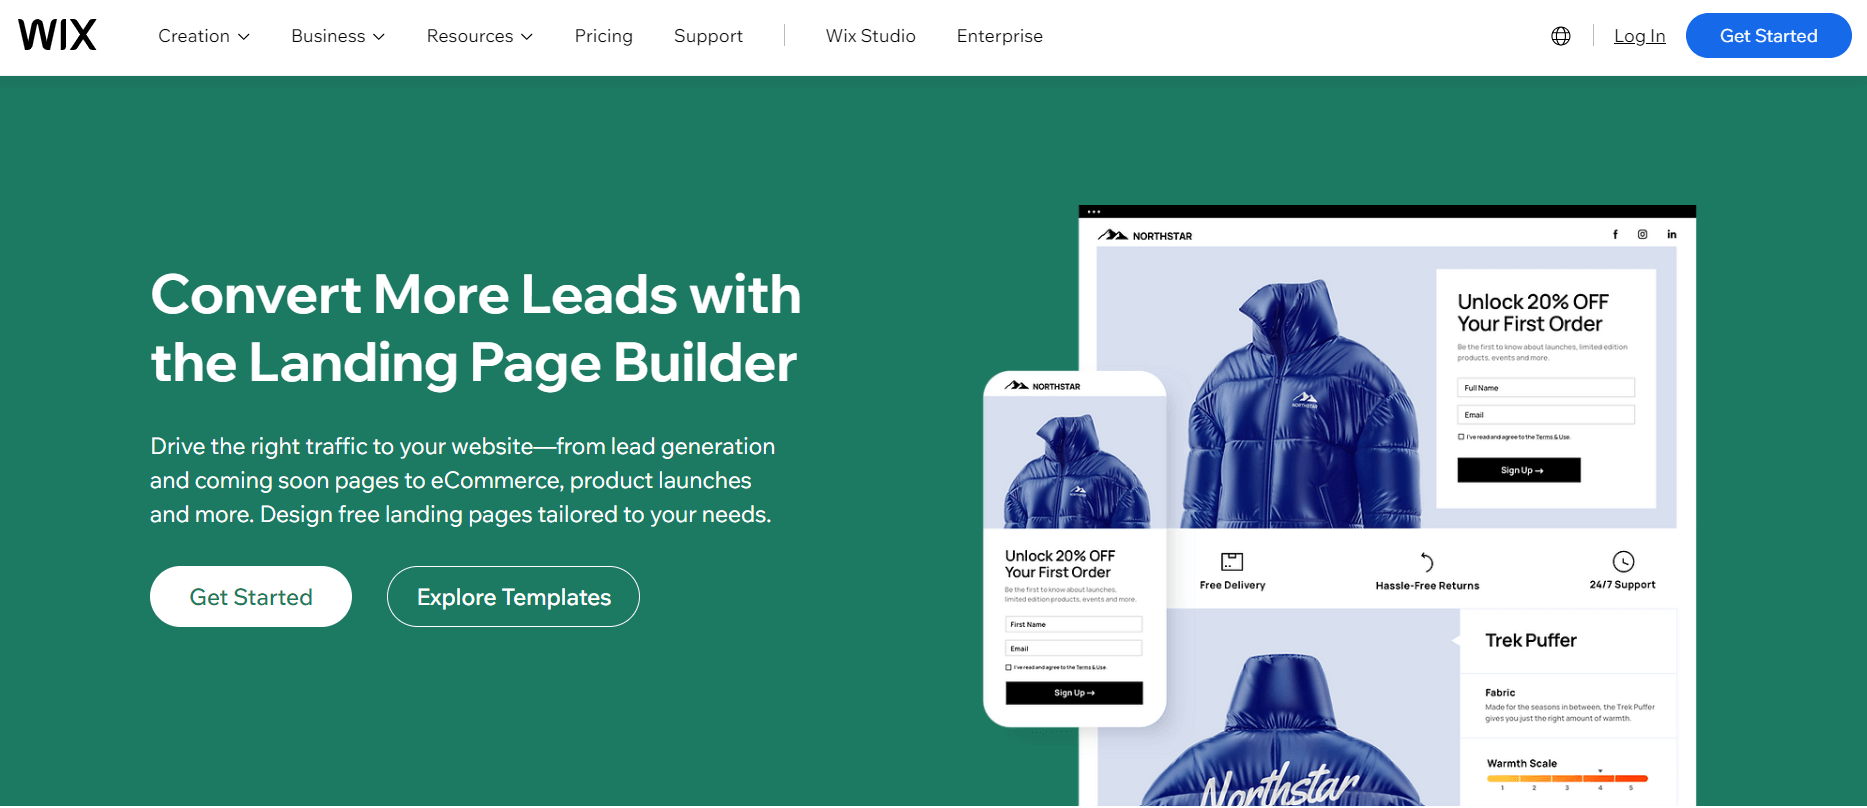 Premier Landing Page Builder Tools for Affiliate Marketing - Phonexa